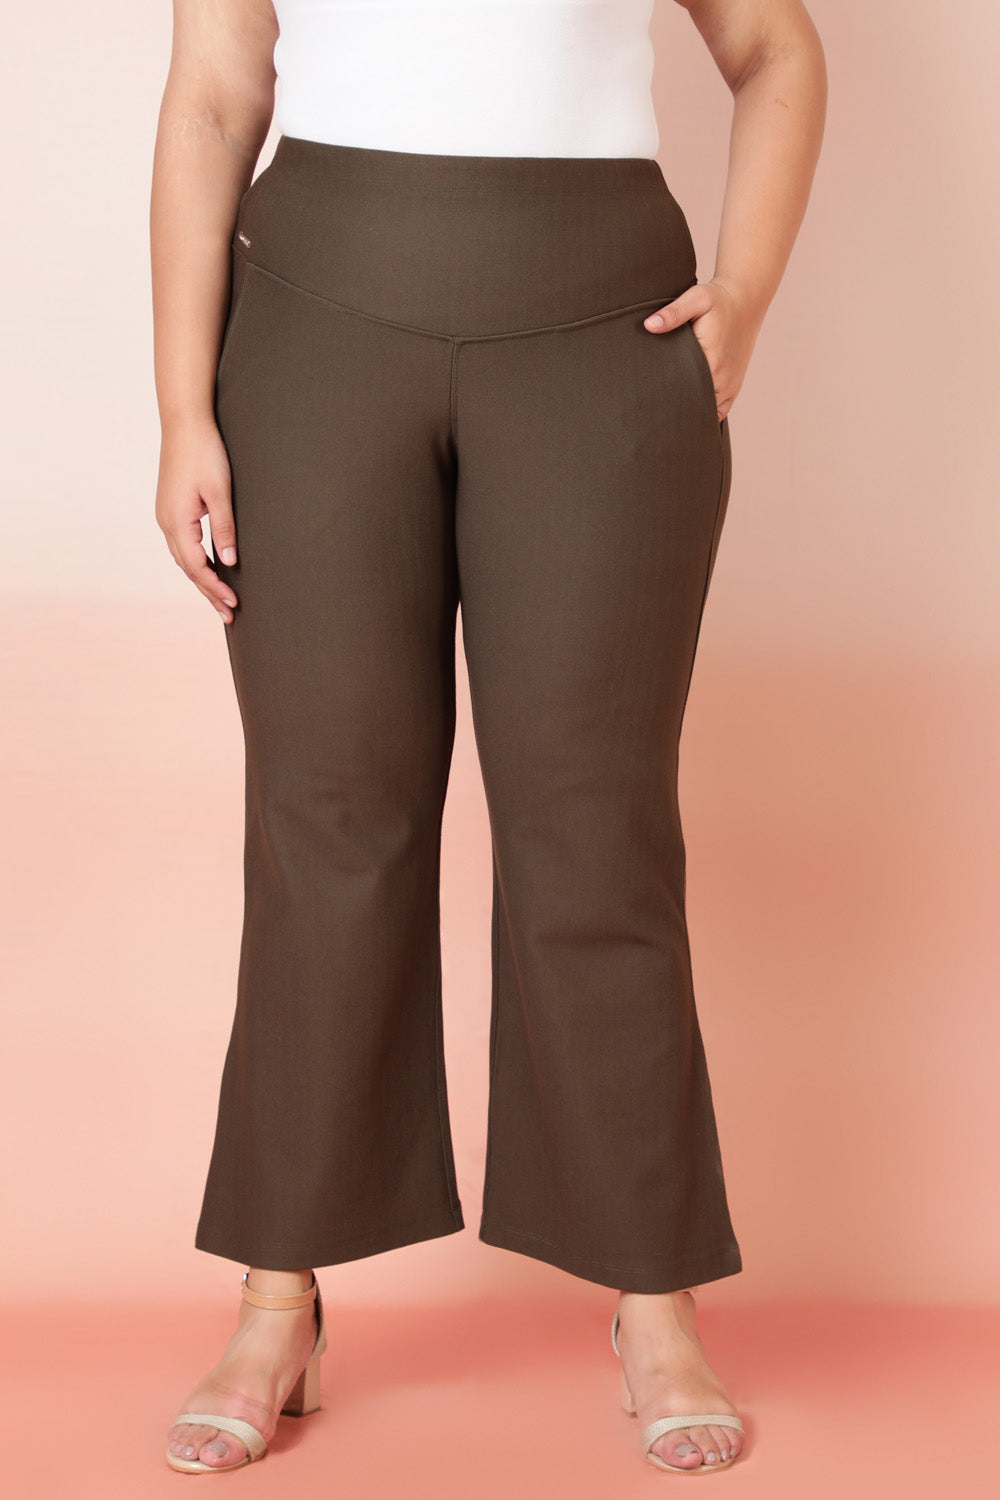 MakeMeChic Women's Plus Size High Waist Flare Pants Bell Bottom Pants Yoga Pants  Black 0XL at  Women's Clothing store